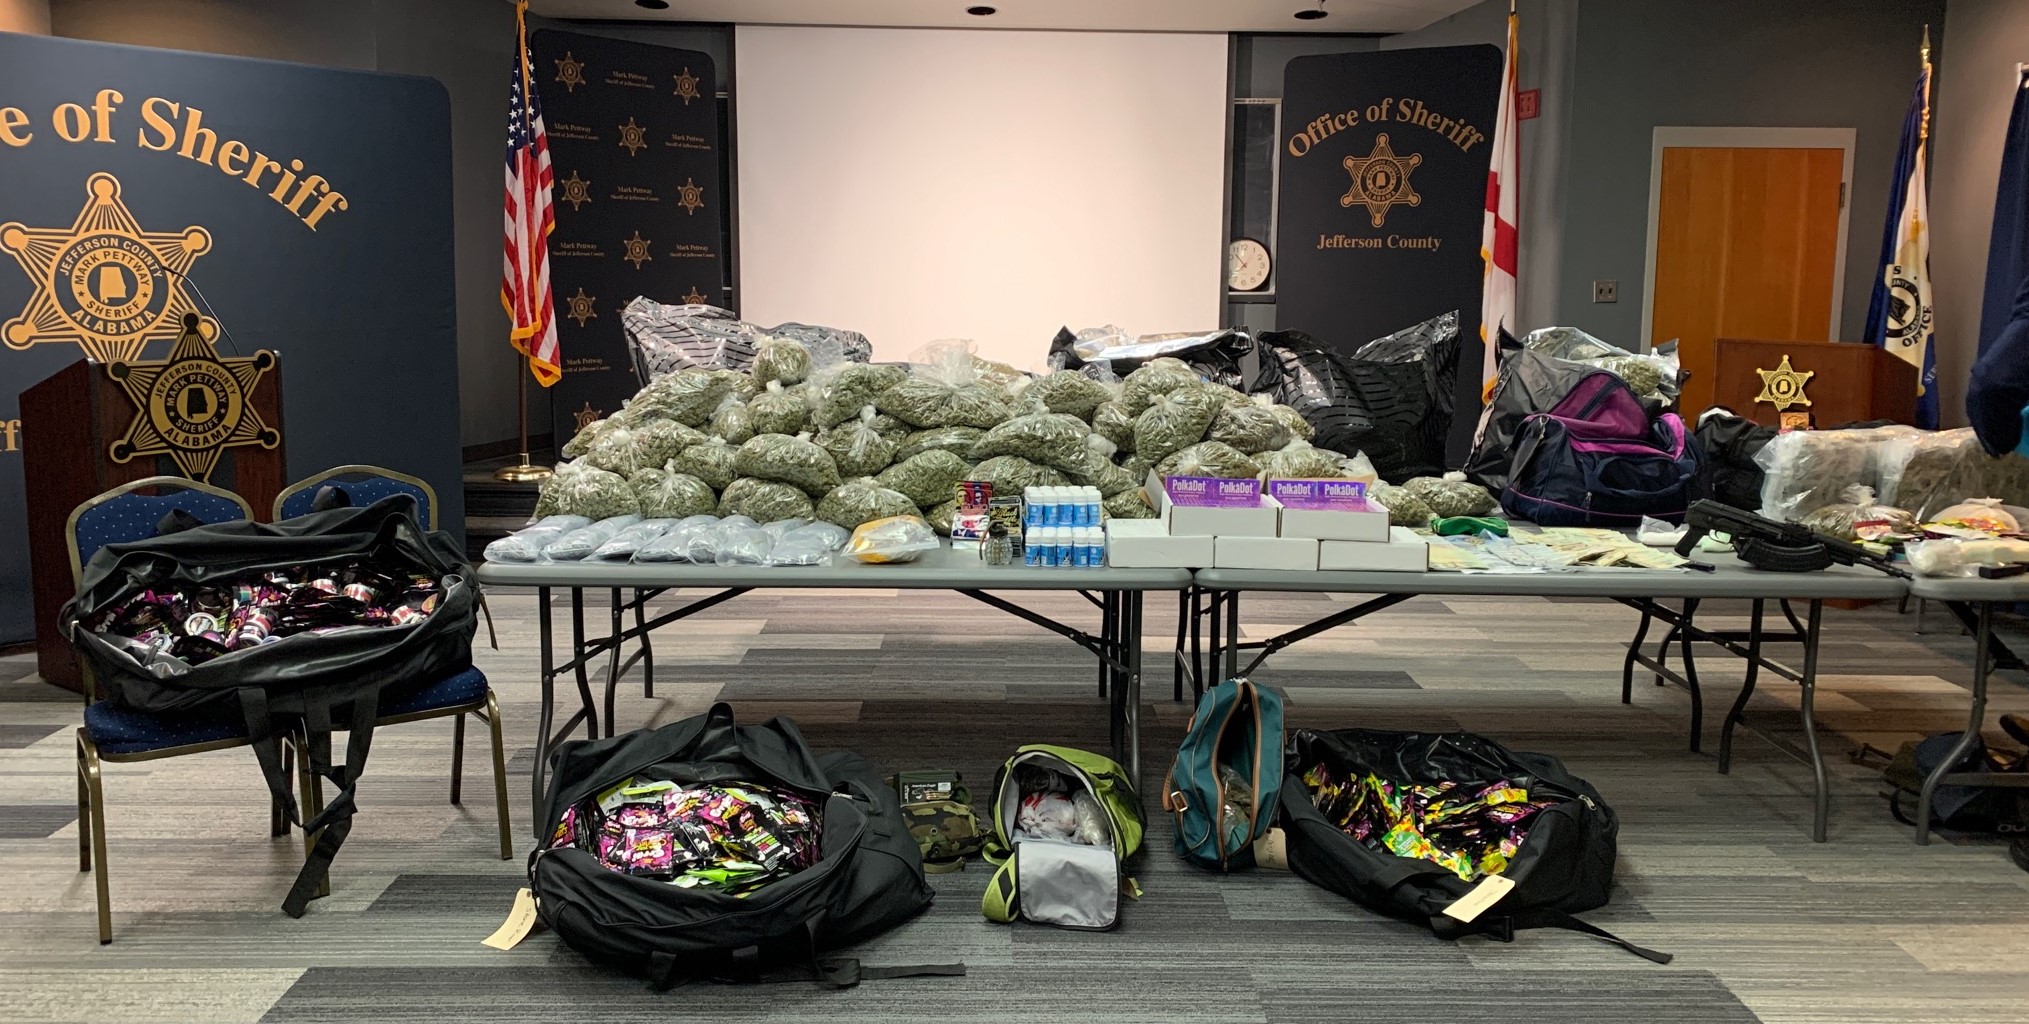 Nearly $4 million in drugs seized after search warrants in Jefferson County